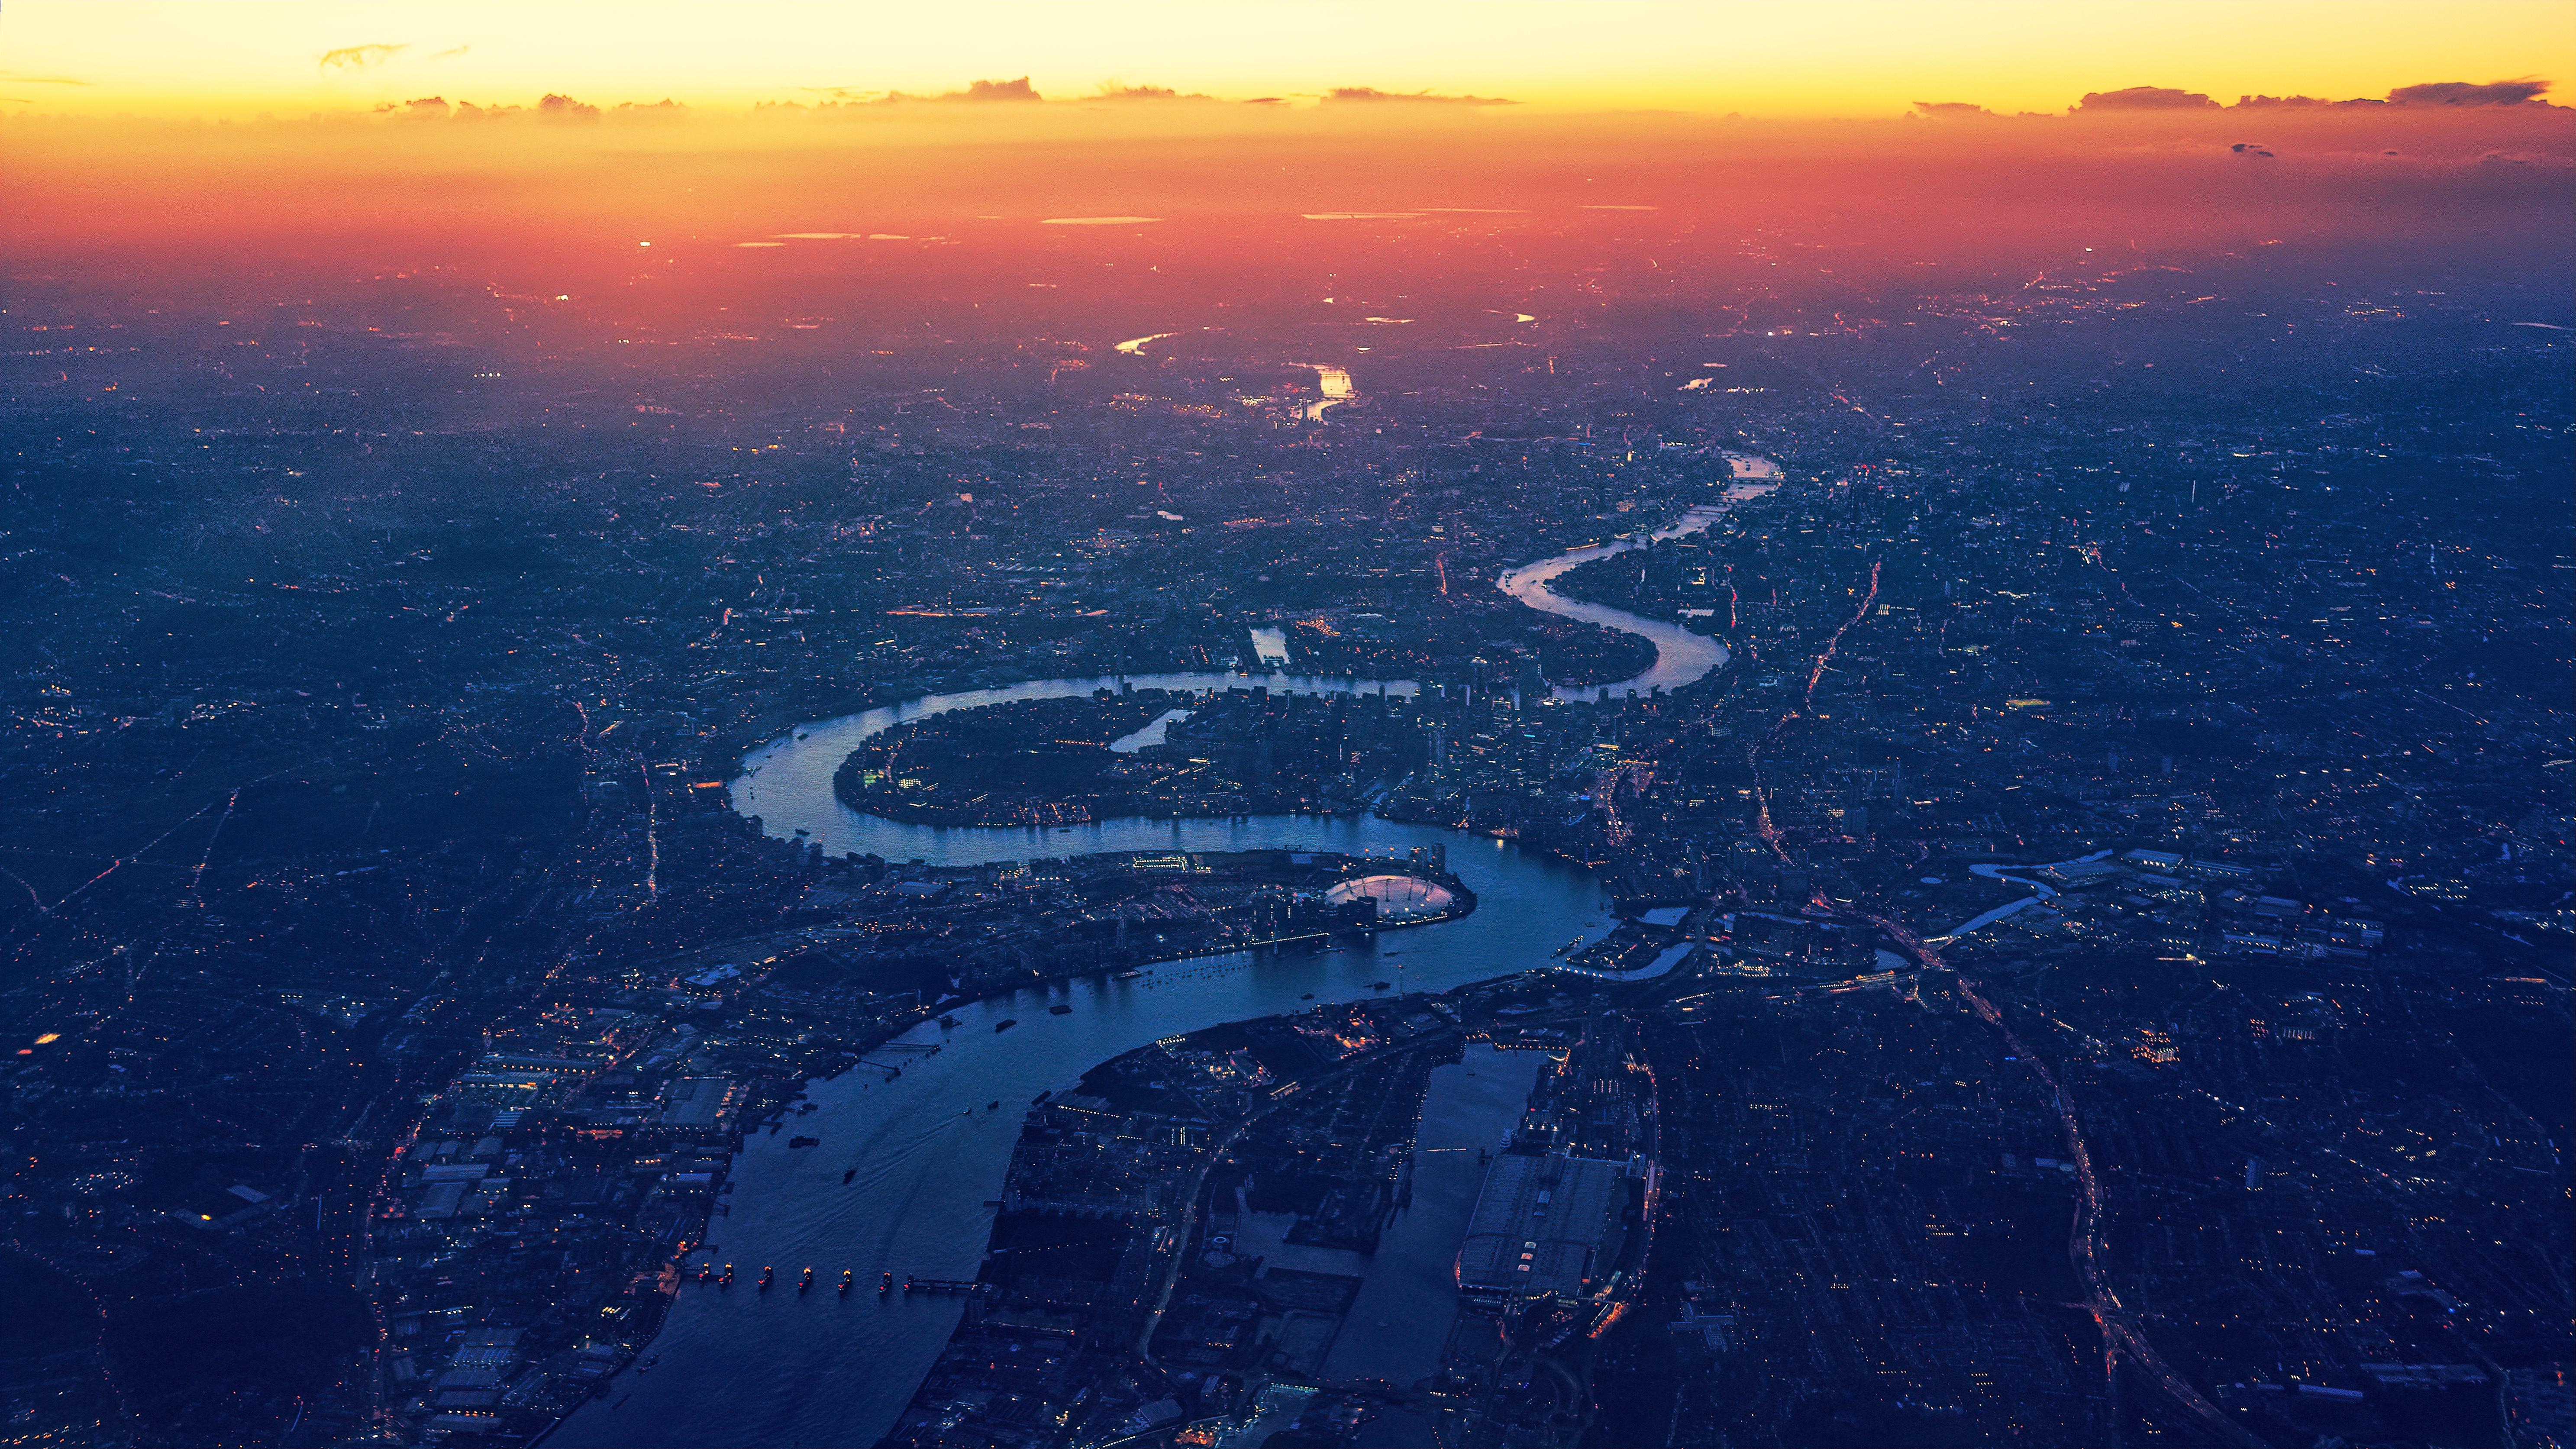 River, #Aerial view, #Sunset, #Cityscape, K, K, #London